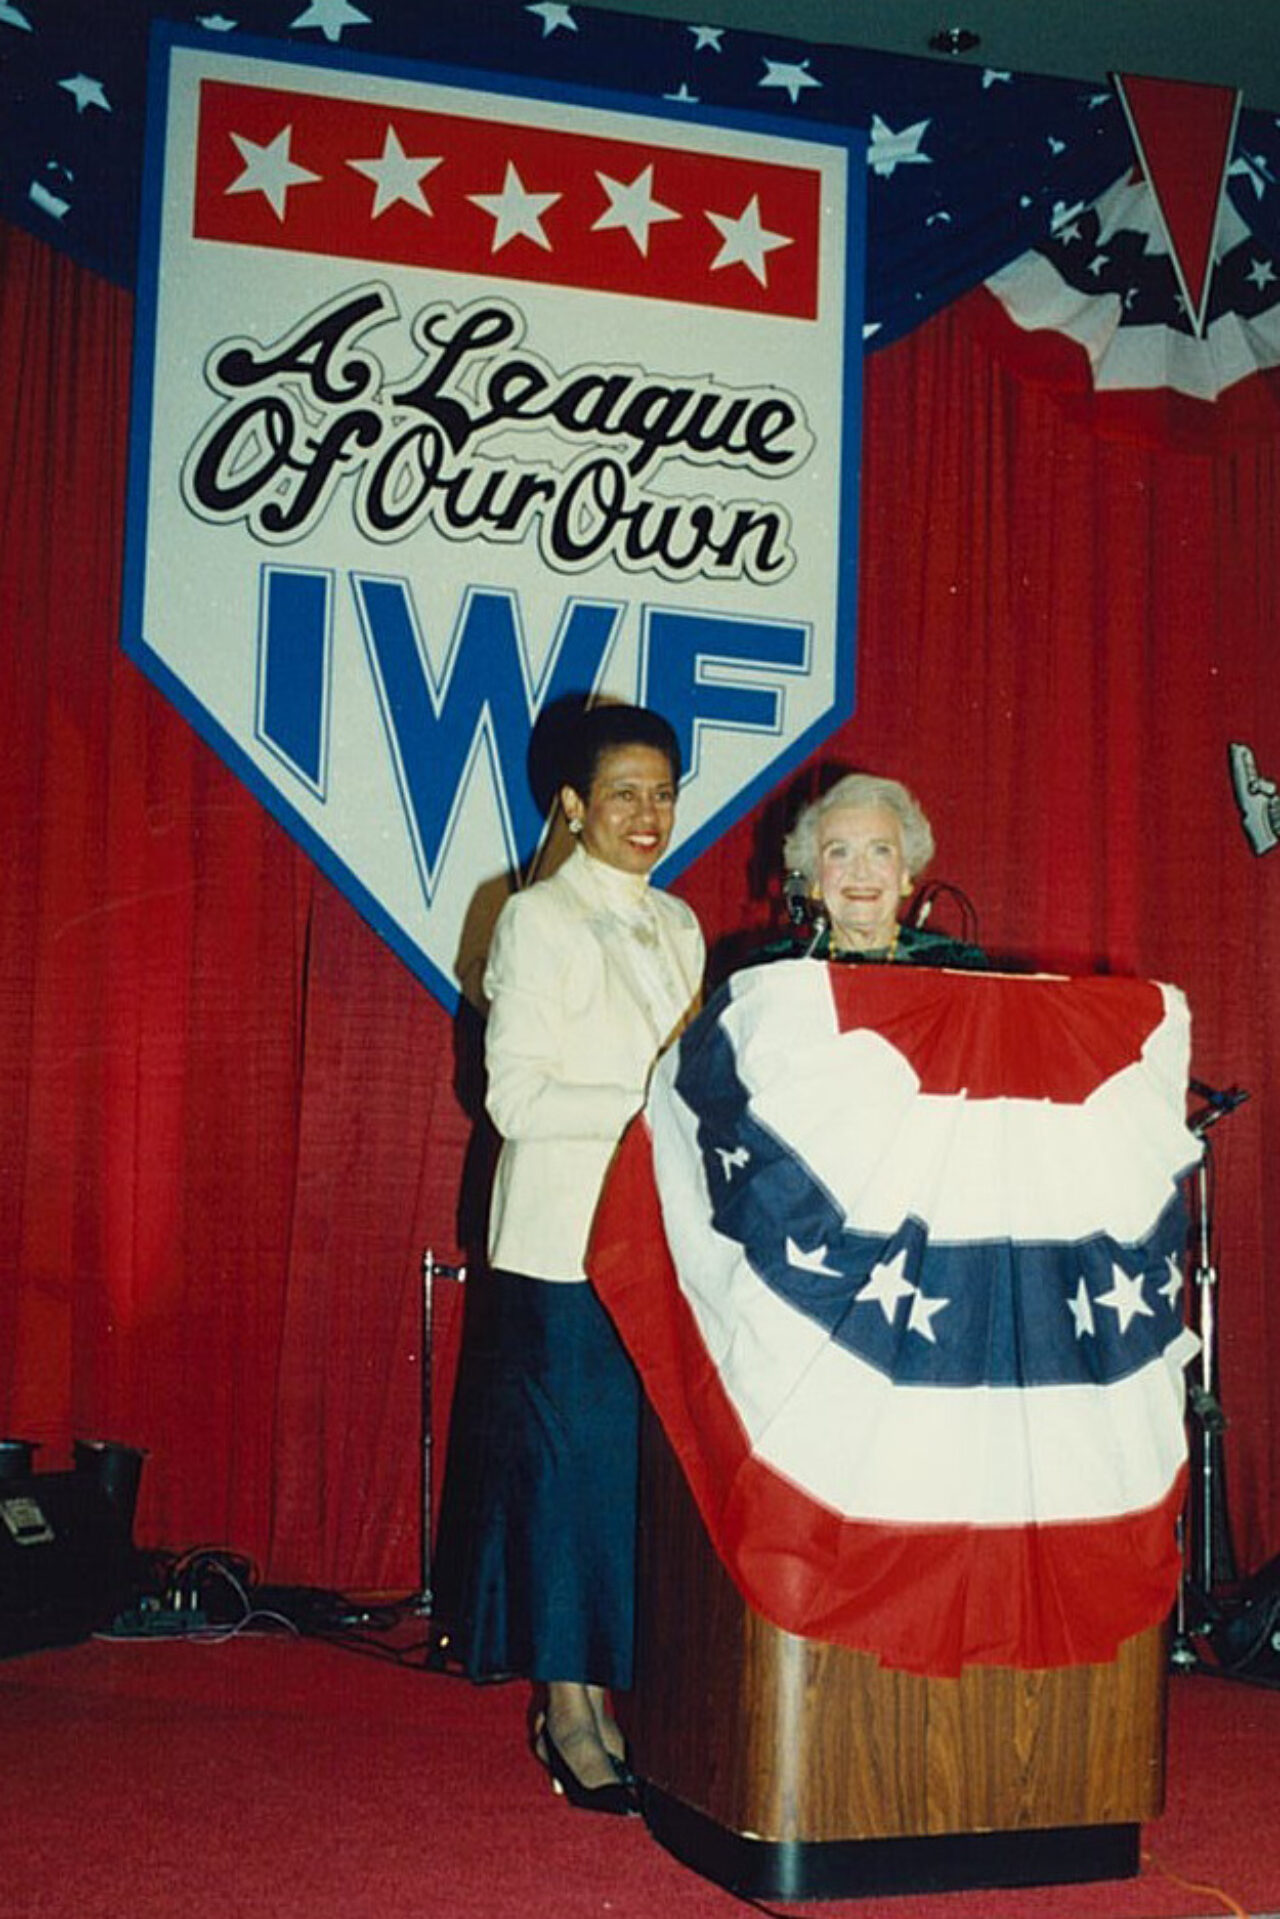 1993 IWF founders Congresswoman Eleanor Holmes Norton and Elinor Guggenheimer, American civic leader, author, and philanthropist